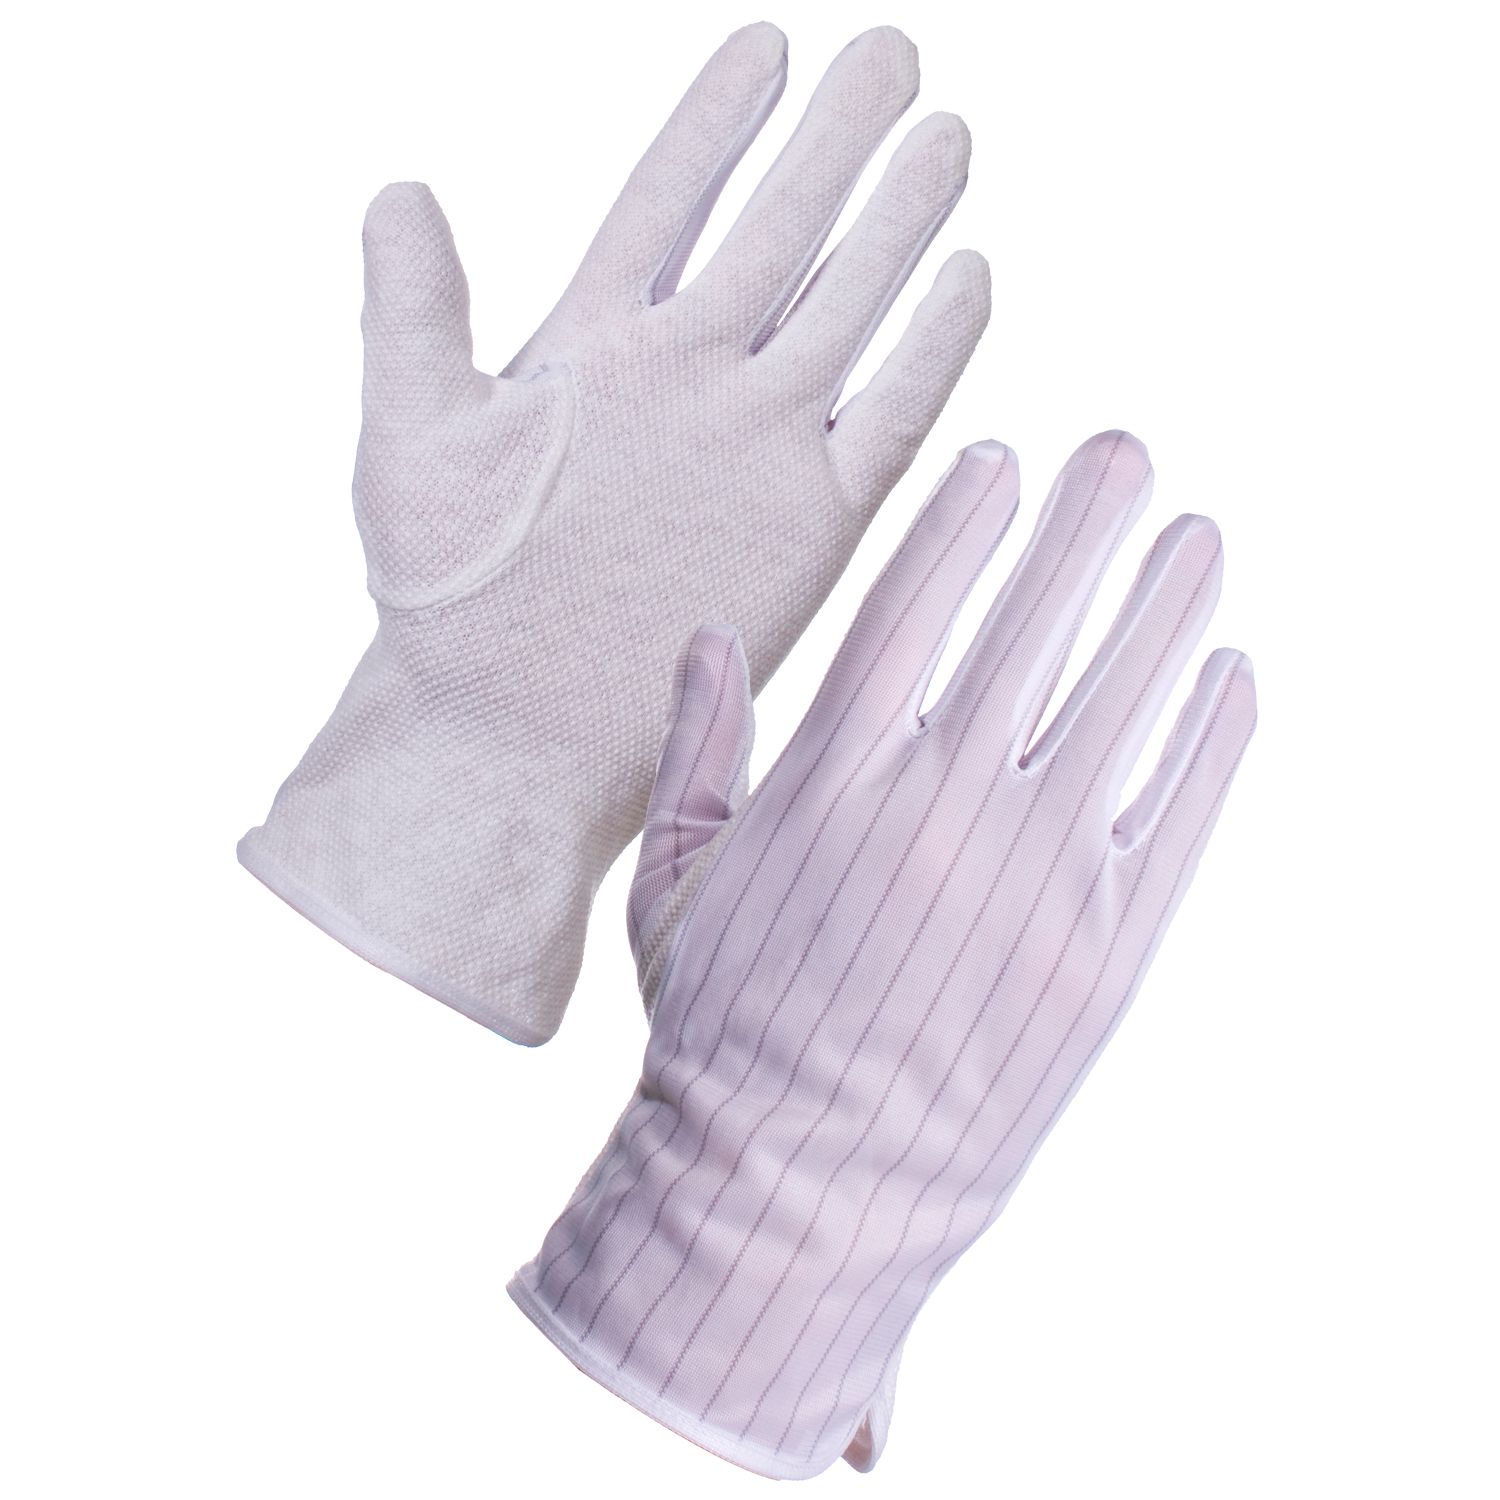 Nylon Antistatic Interwoven Carbon Gloves